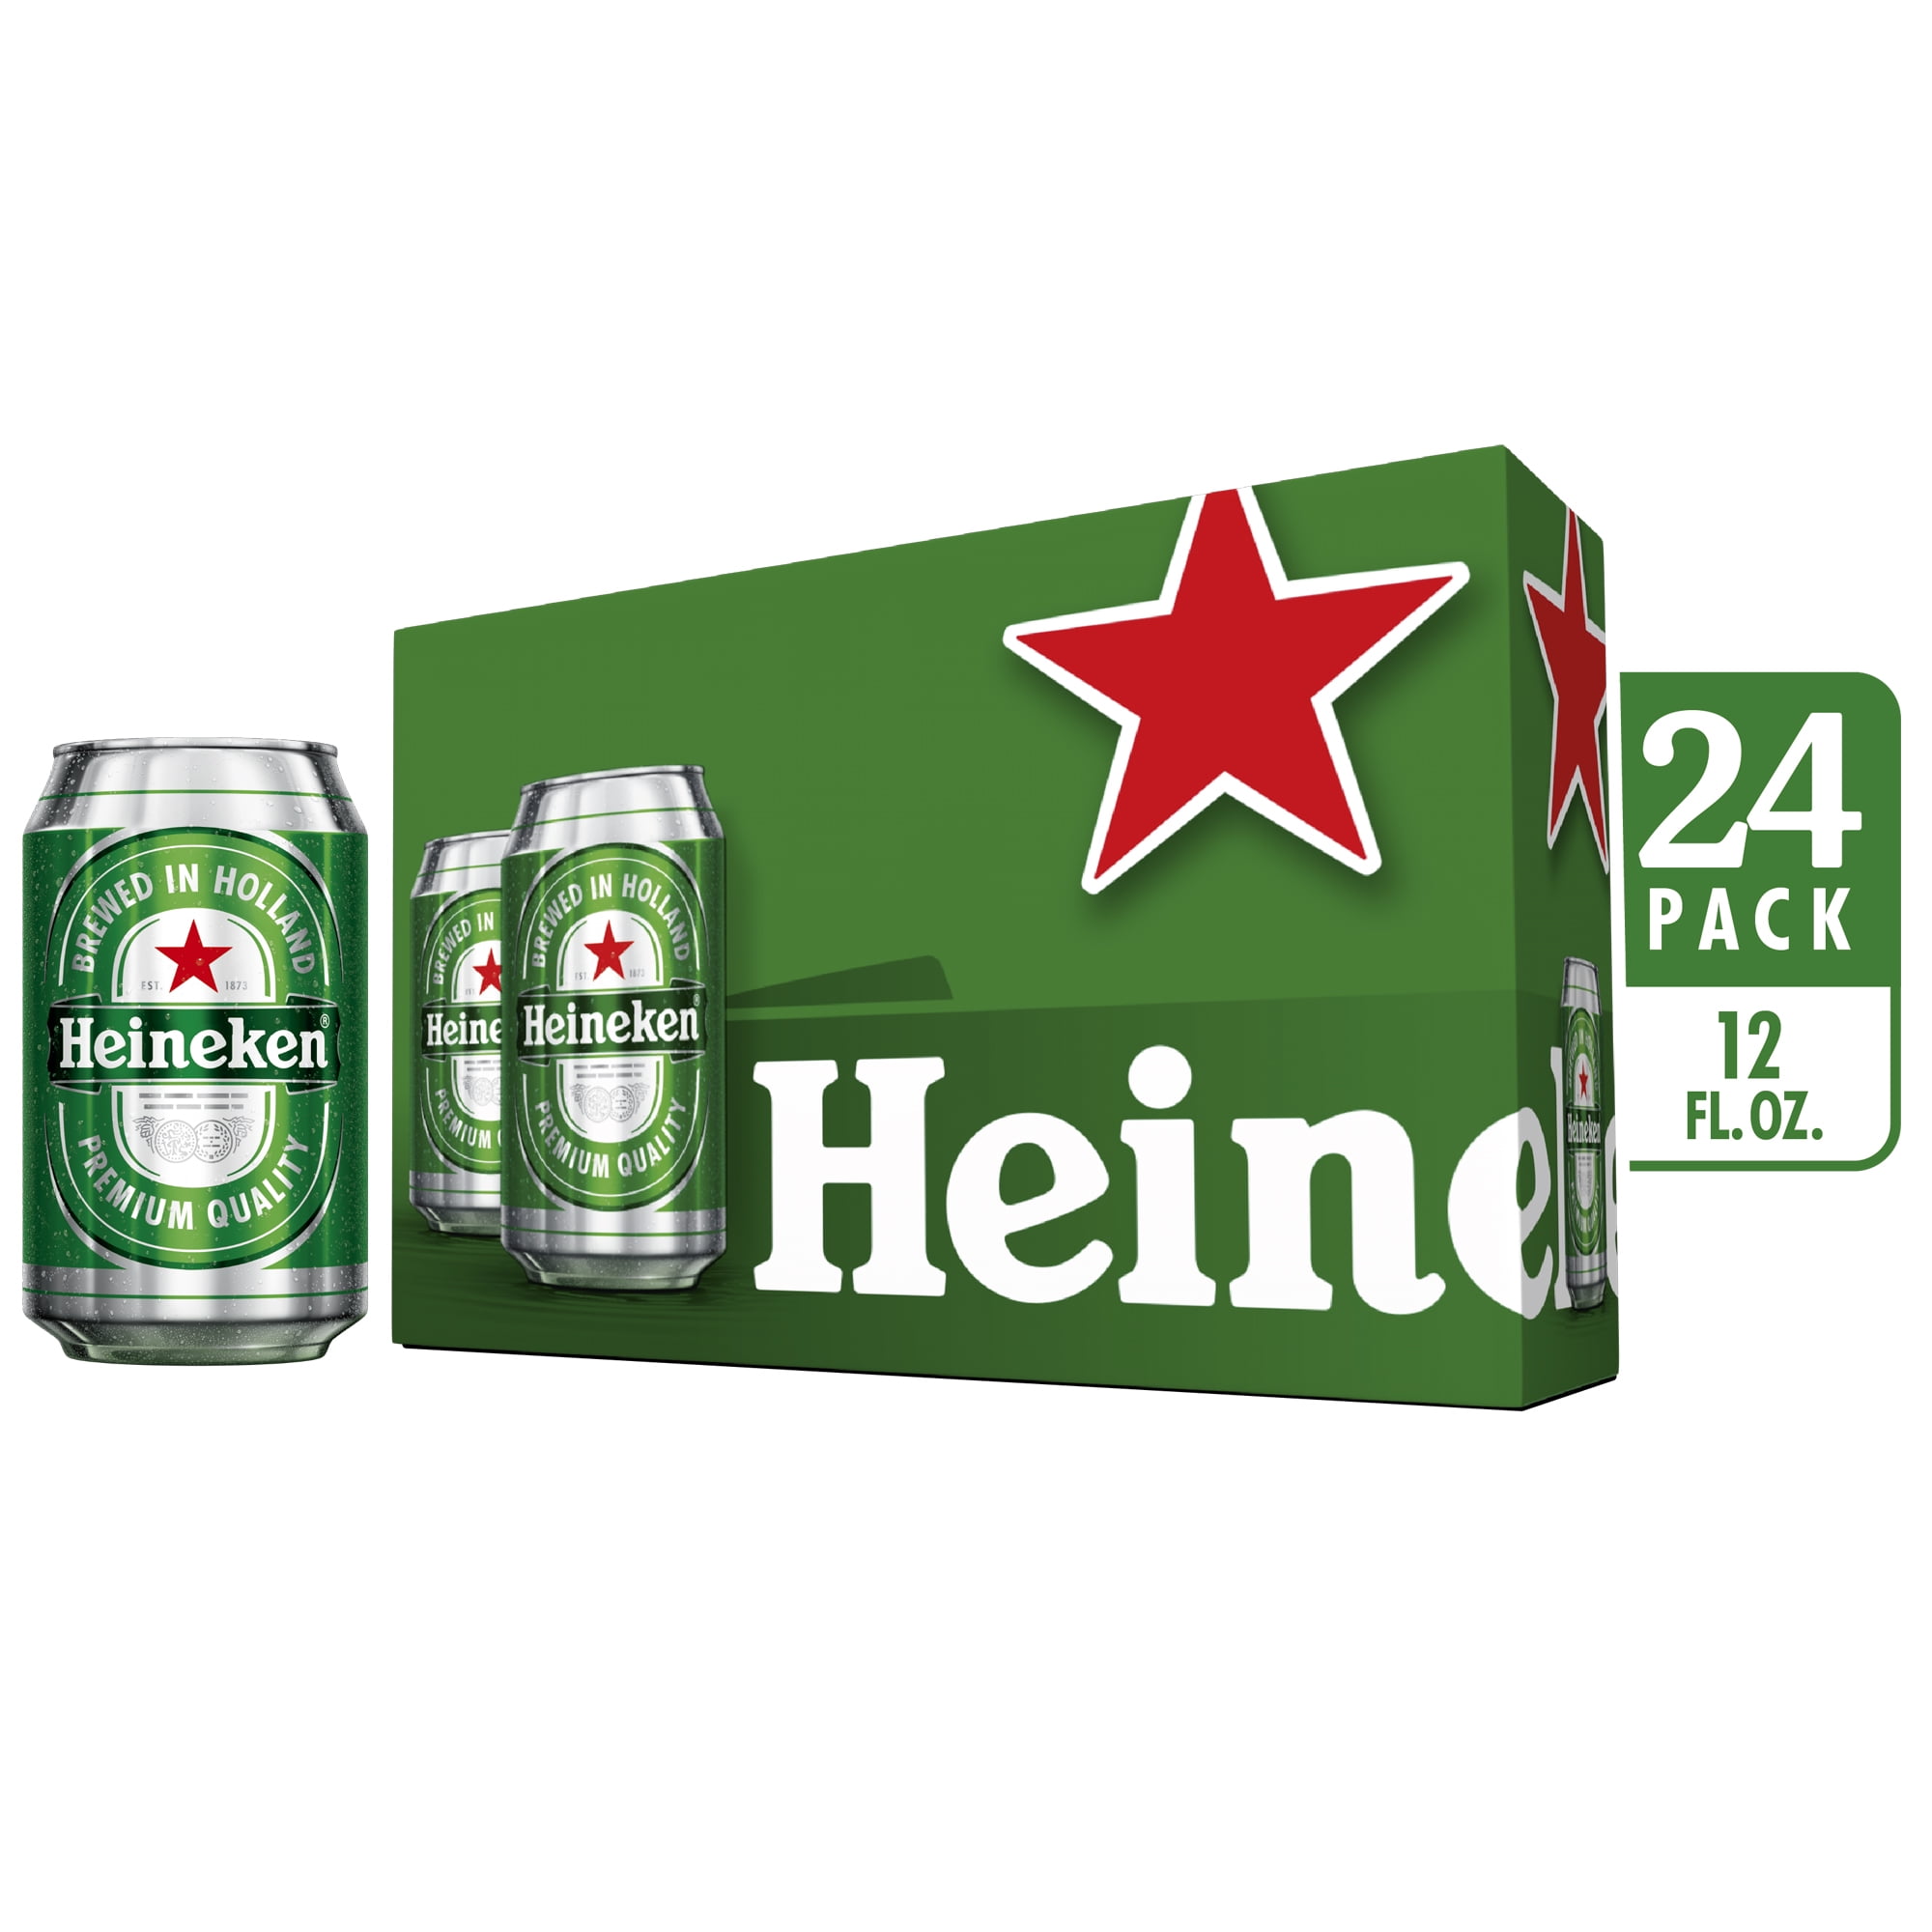 Heineken Lager, 24 pack, 12 fl oz cans